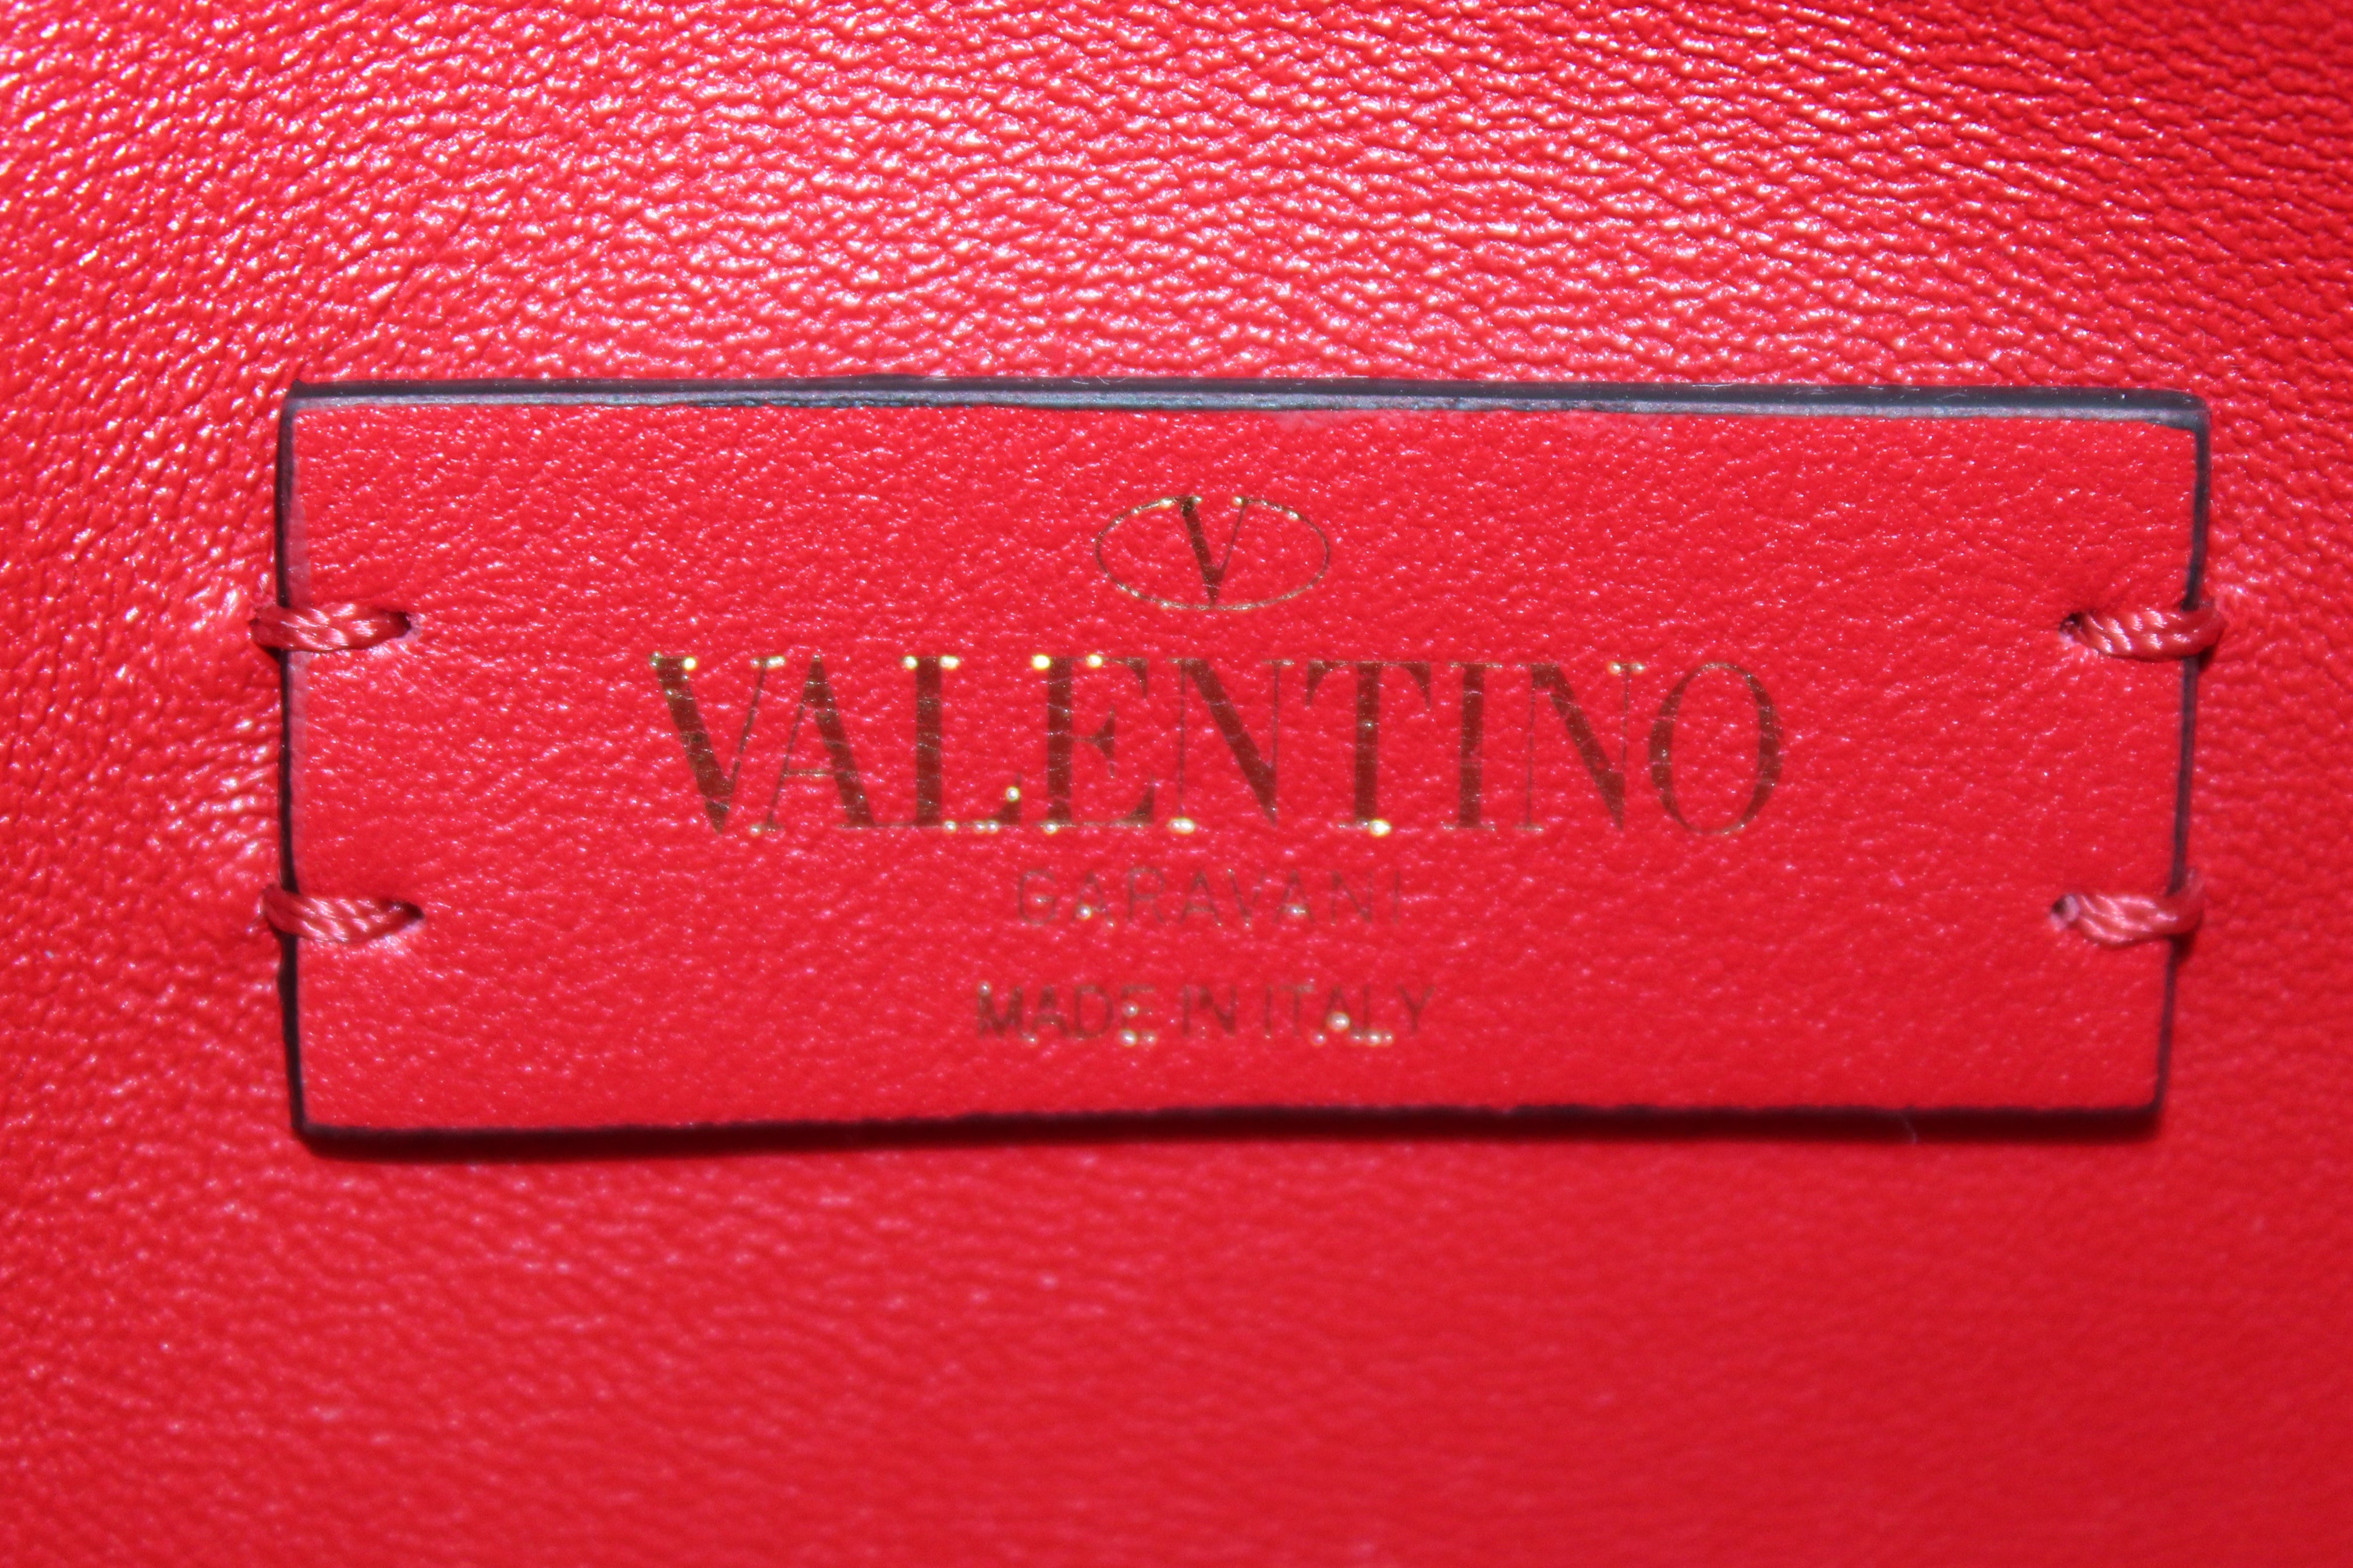 Authentic Valentino garavani rockstud sling bag